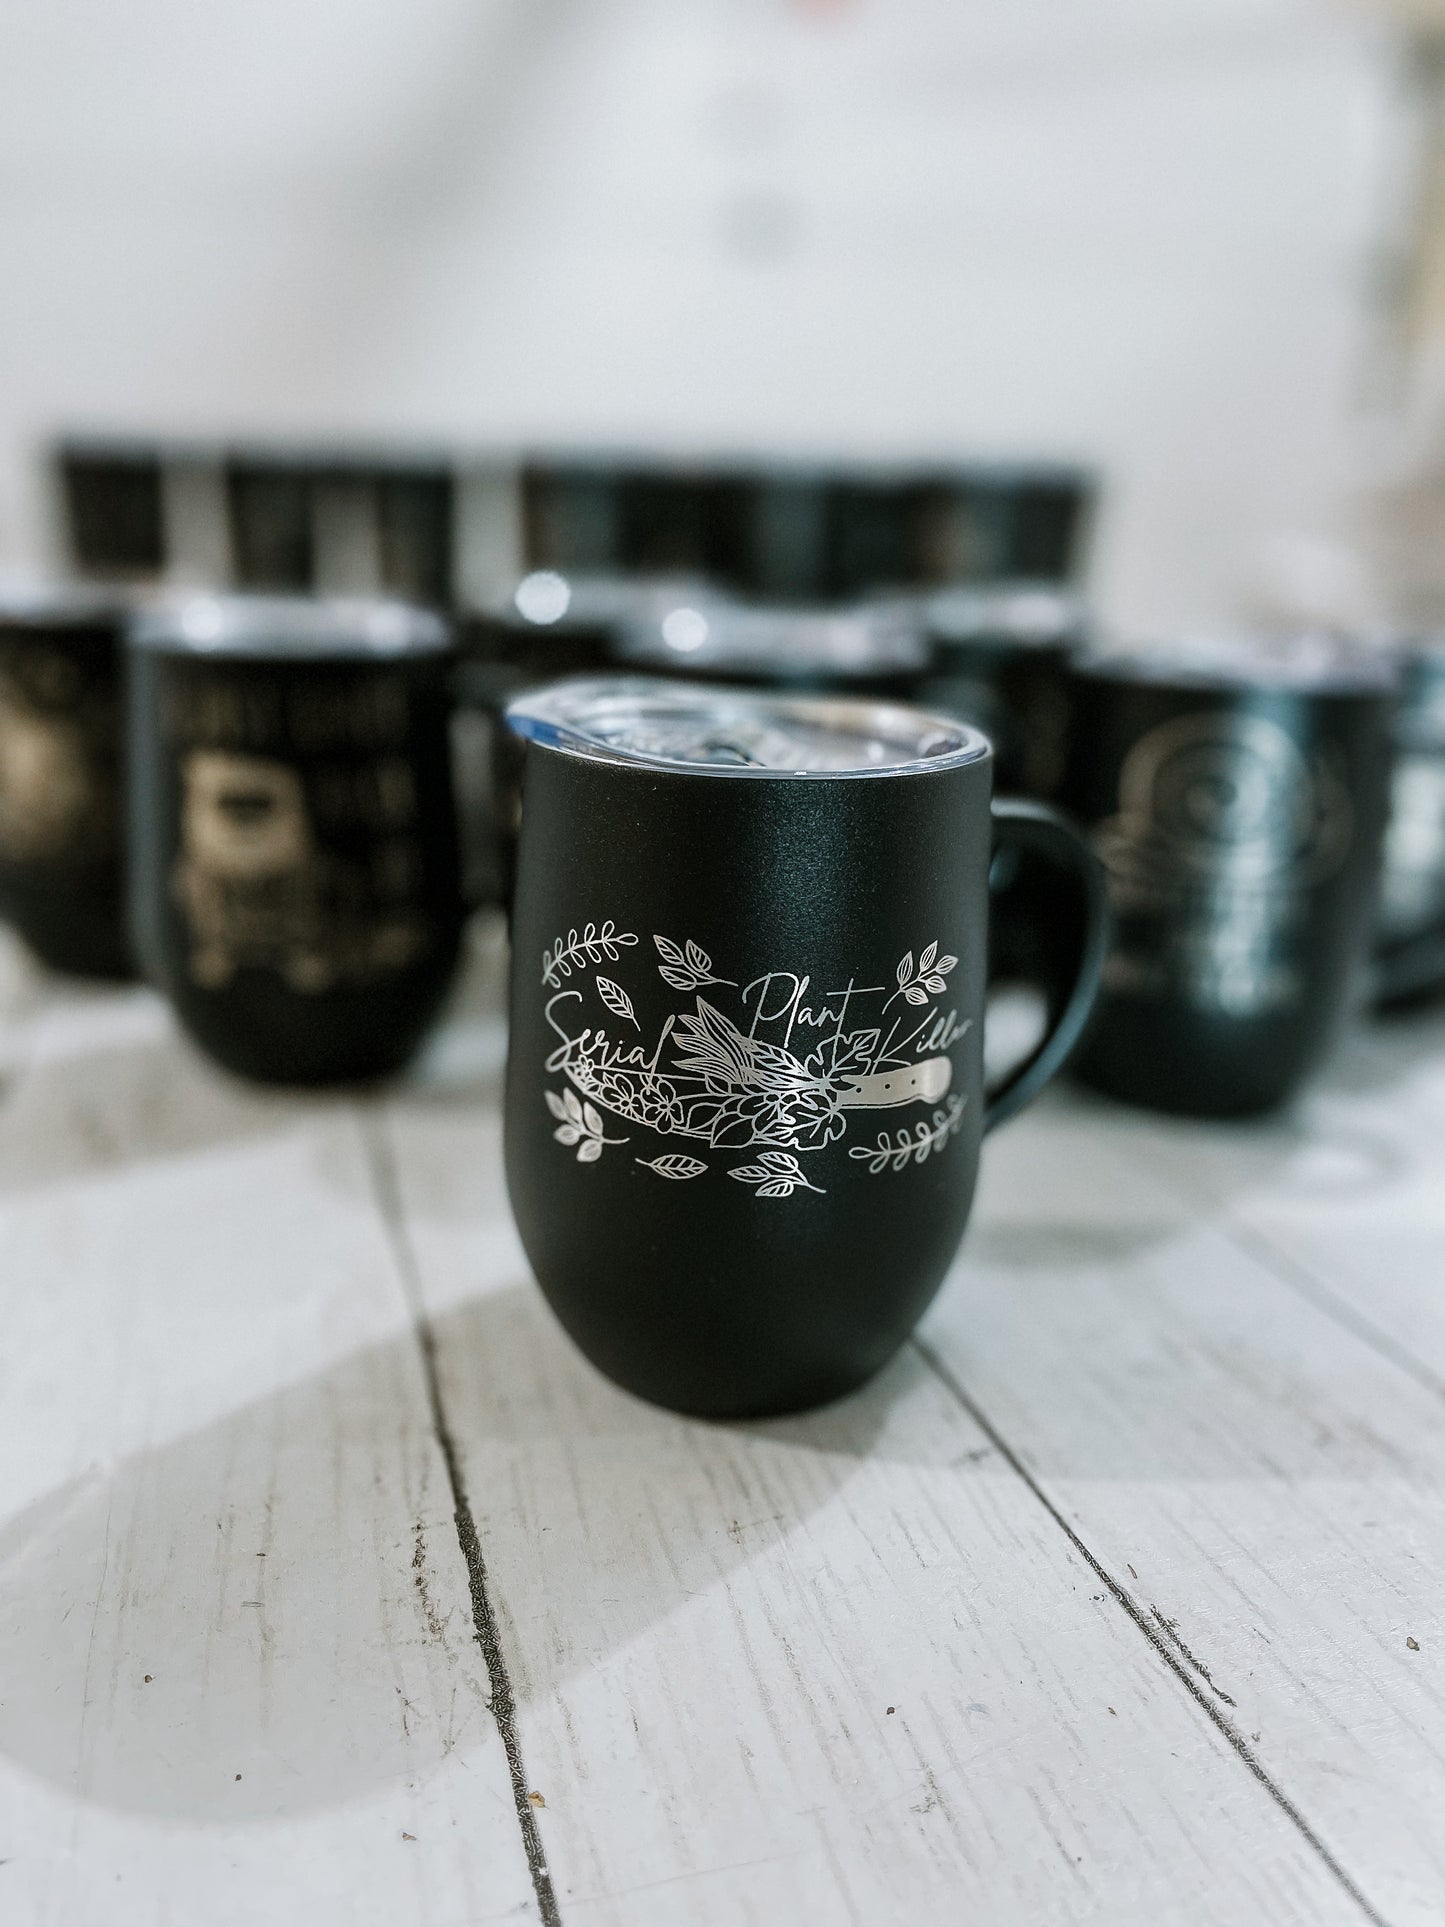 DoorBuster - 12 oz Engraved stainless steel coffee mug or wine cup with handle